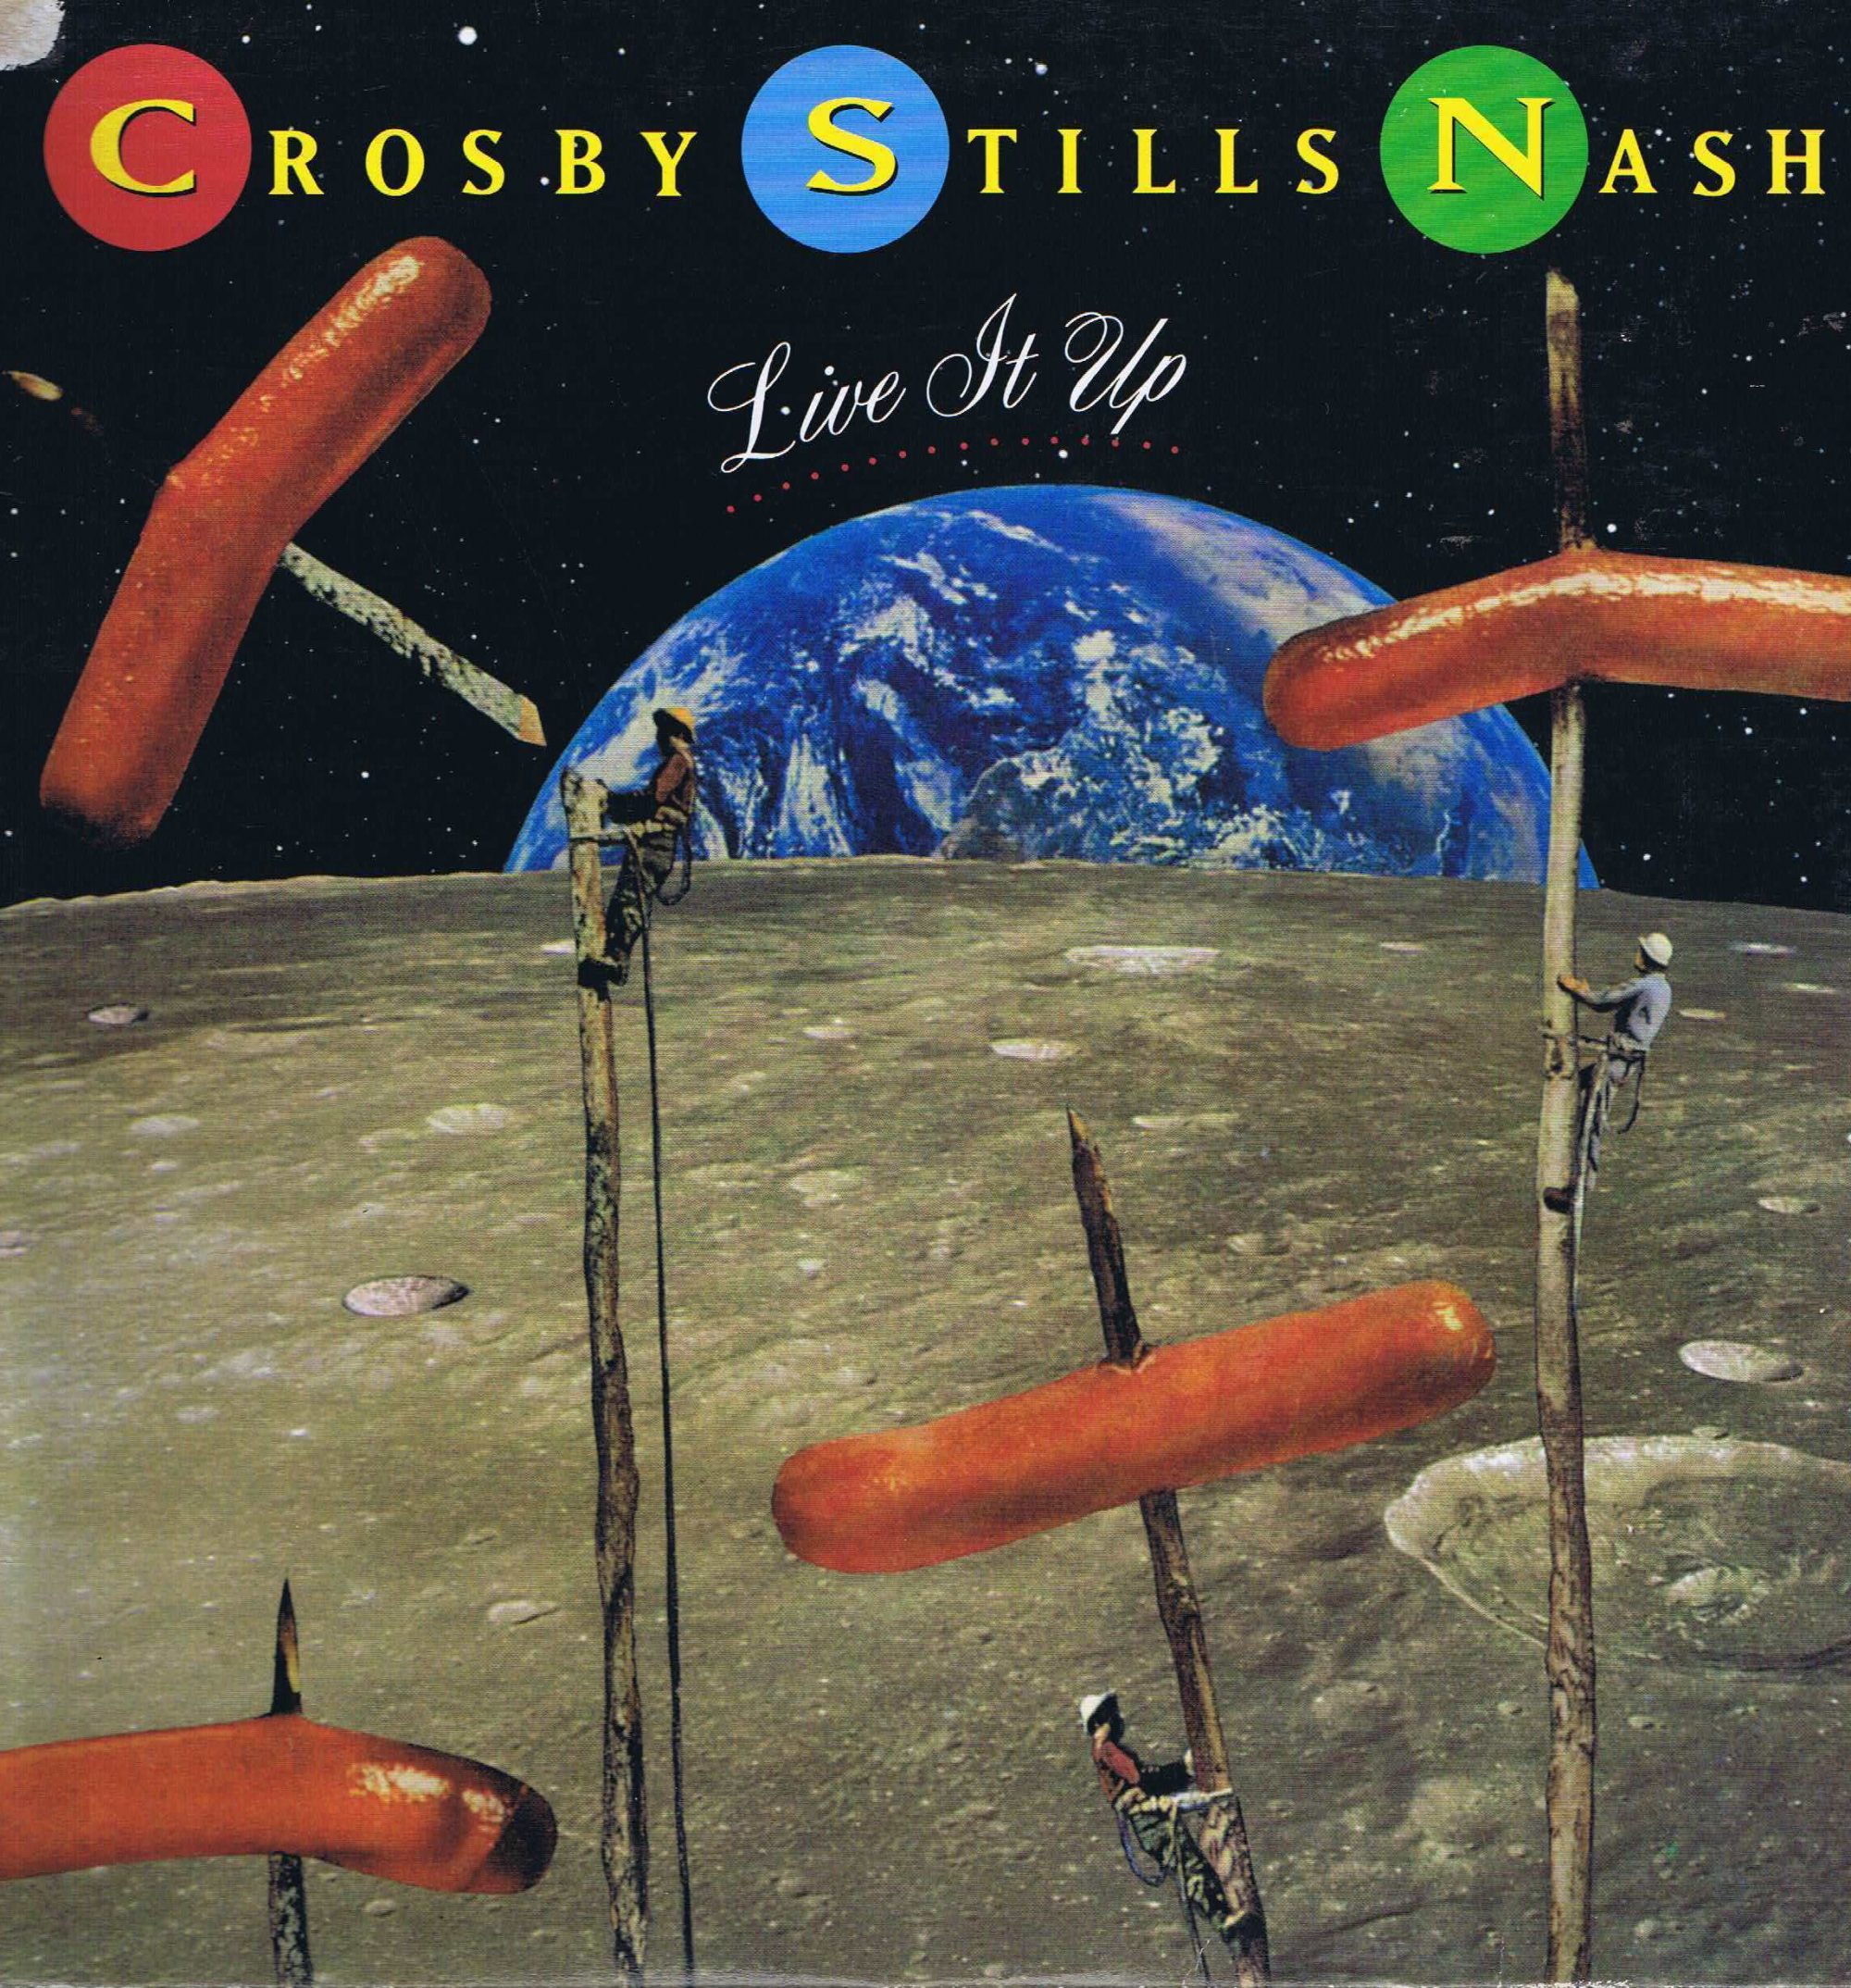 crosby stills nash live it up - Crosby Stills Nash Live It Up